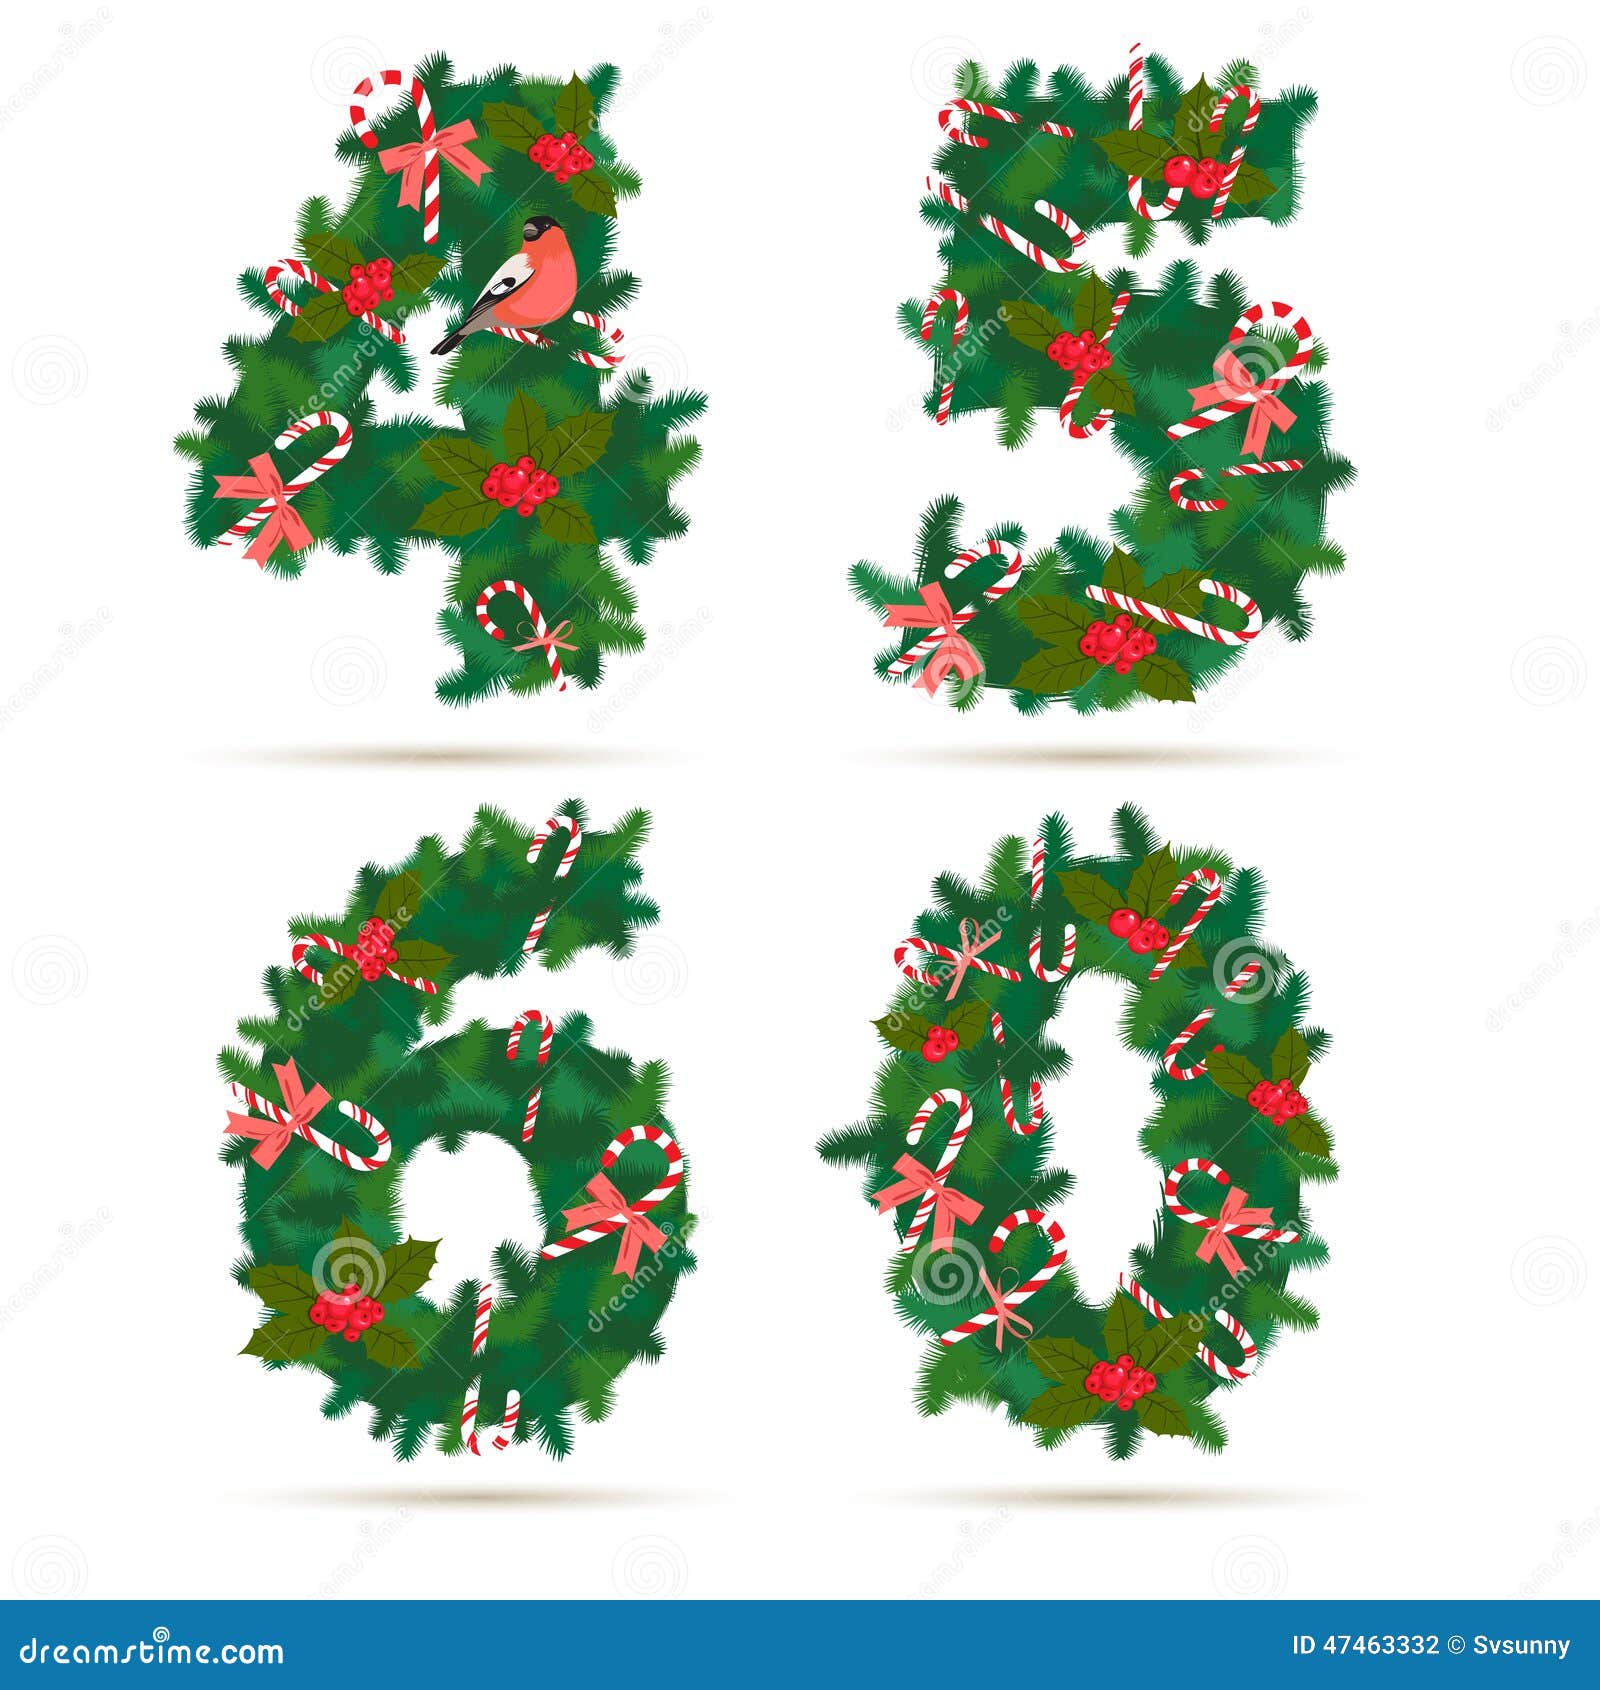 Christmas Festive Wreath Numbers: 4, 5, 6, 0. Stock ...